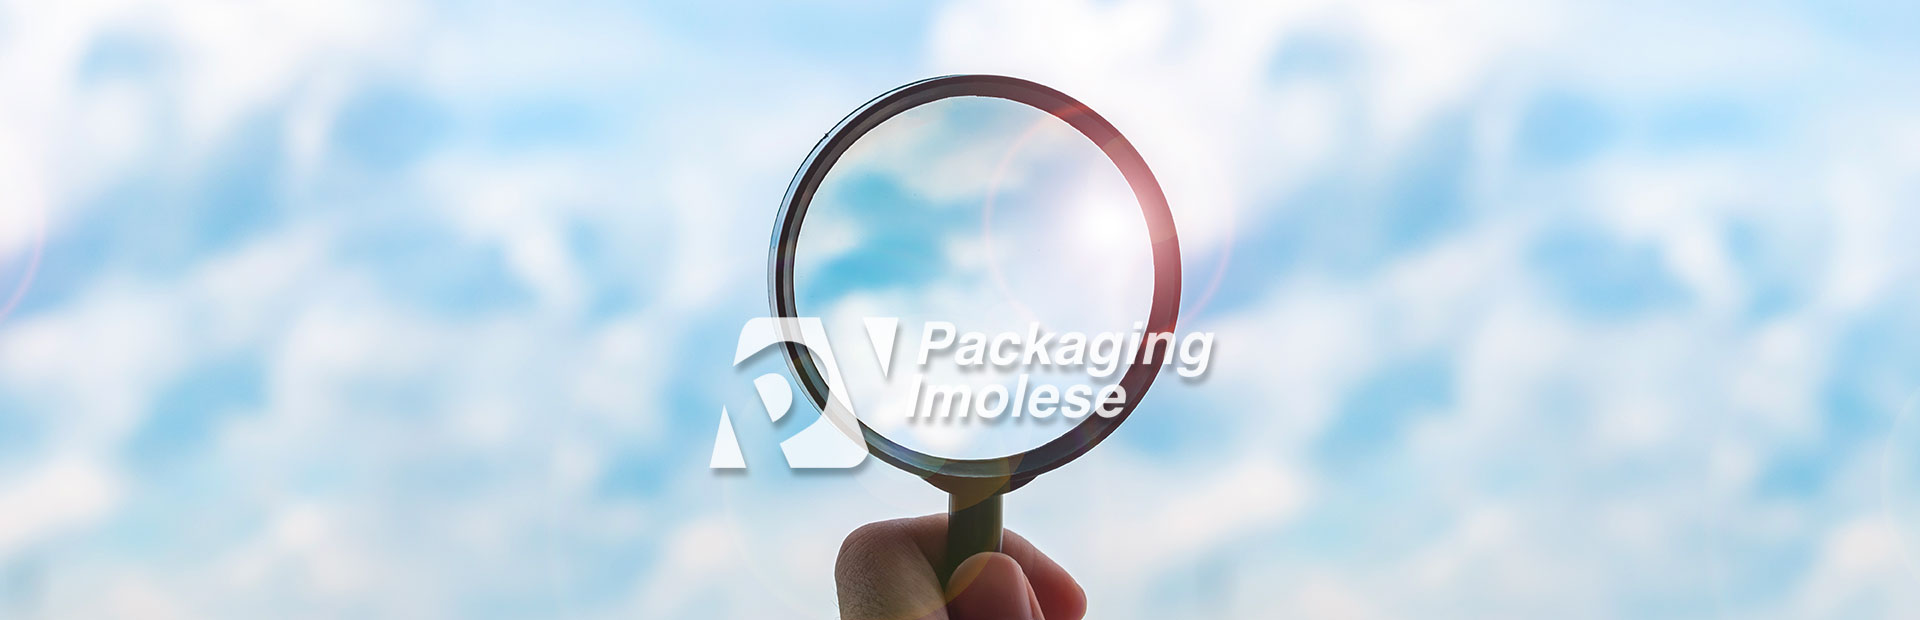 Packaging Imolese - reclami